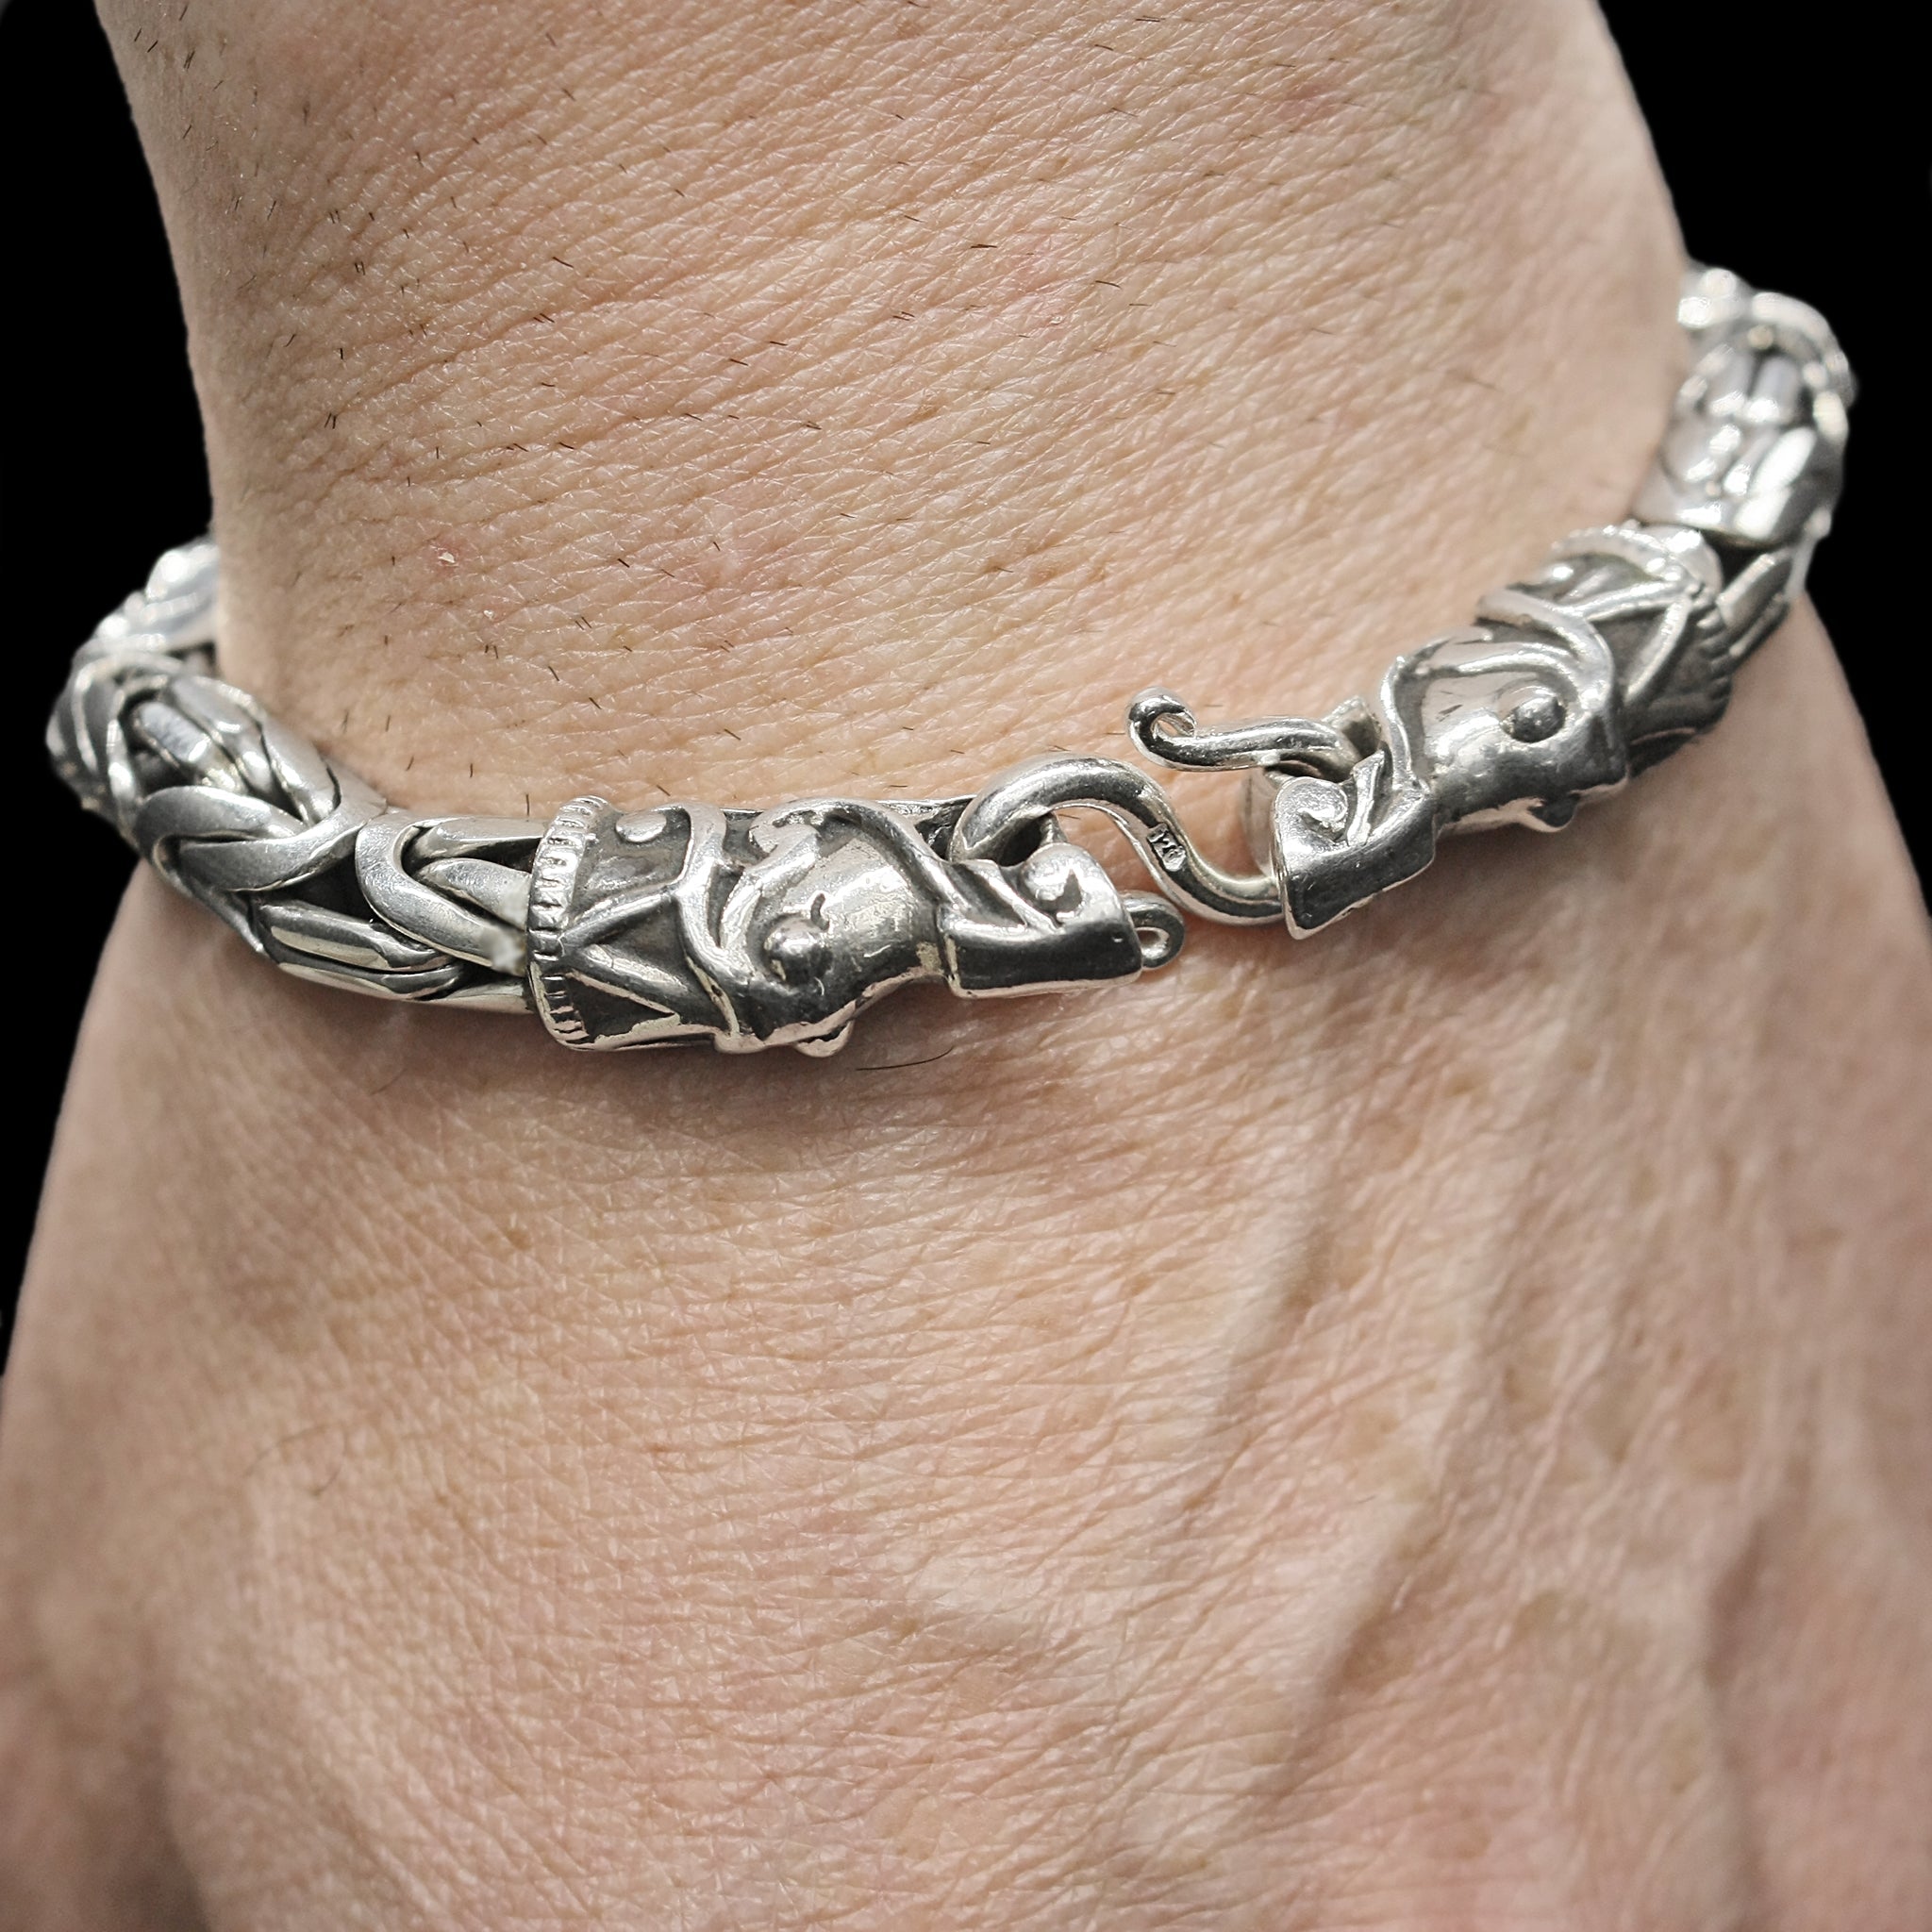 8mm Silver Viking King Bracelet With Gotlandic Dragon Heads On Wrist